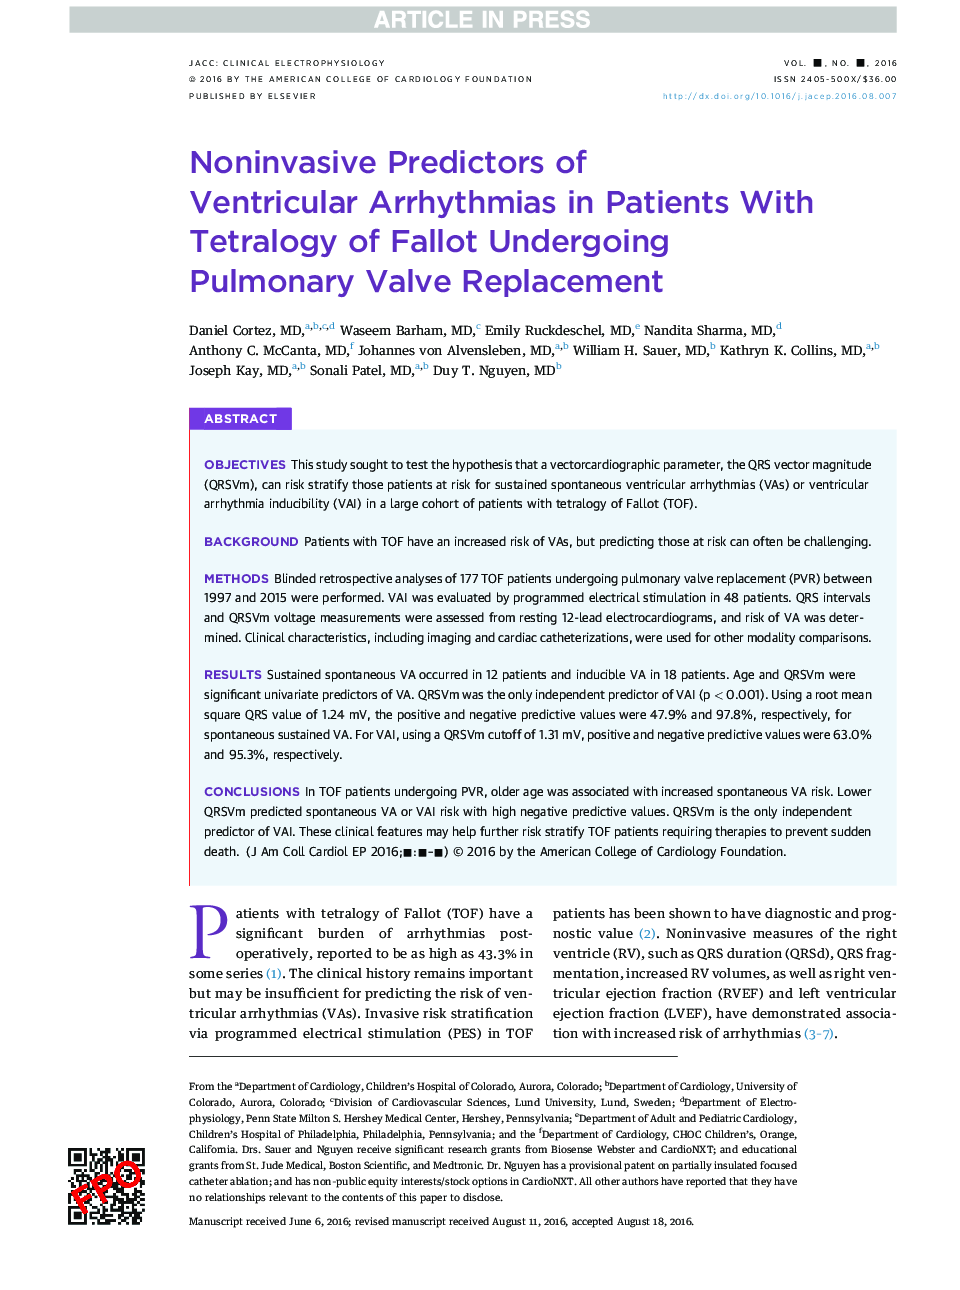 Noninvasive Predictors of VentricularÂ Arrhythmias in Patients With Tetralogy ofÂ Fallot Undergoing PulmonaryÂ ValveÂ Replacement